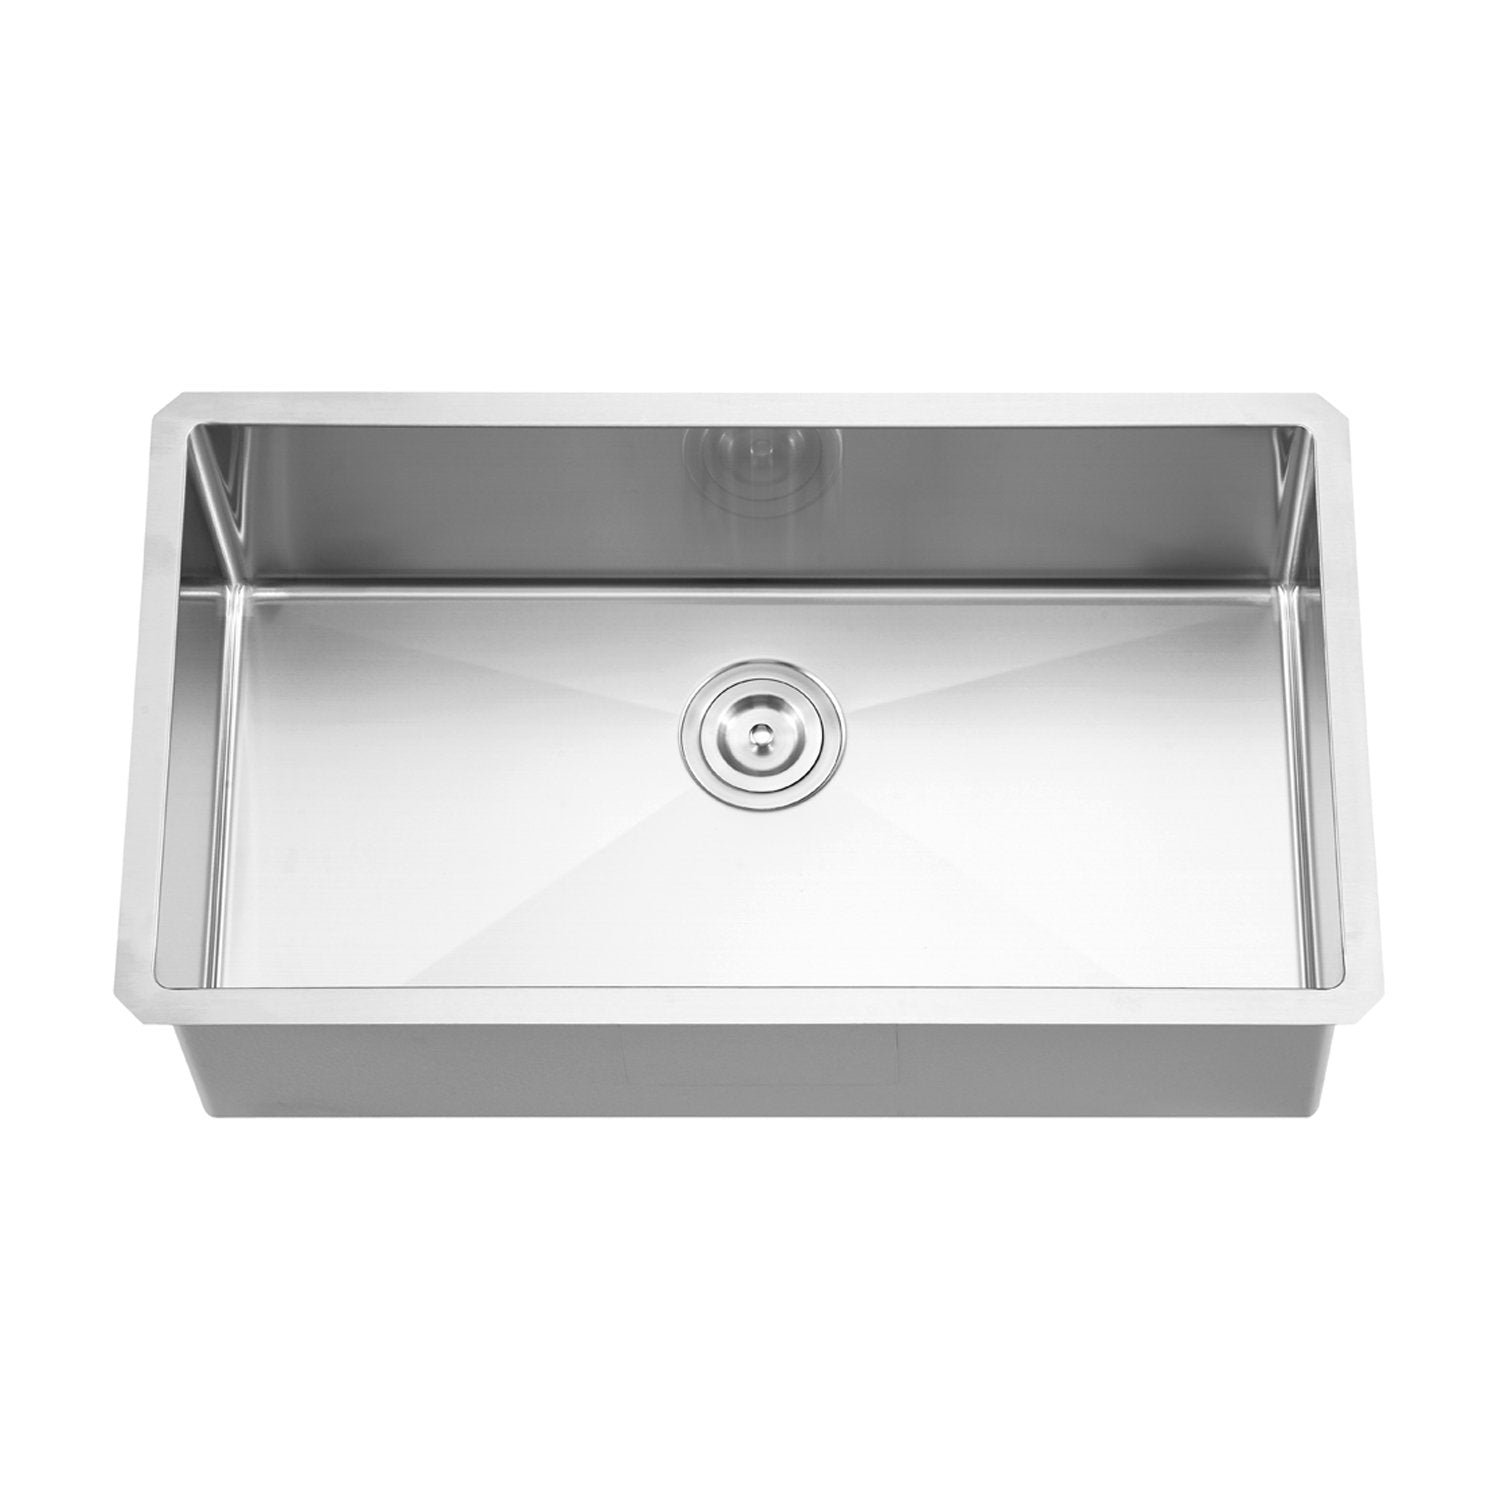 DAX Handmade Single Bowl Undermount Kitchen Sink, 18 Gauge Stainless Steel, Brushed Finish, 32 x 19 x 10 Inches (DAX-3219R10)